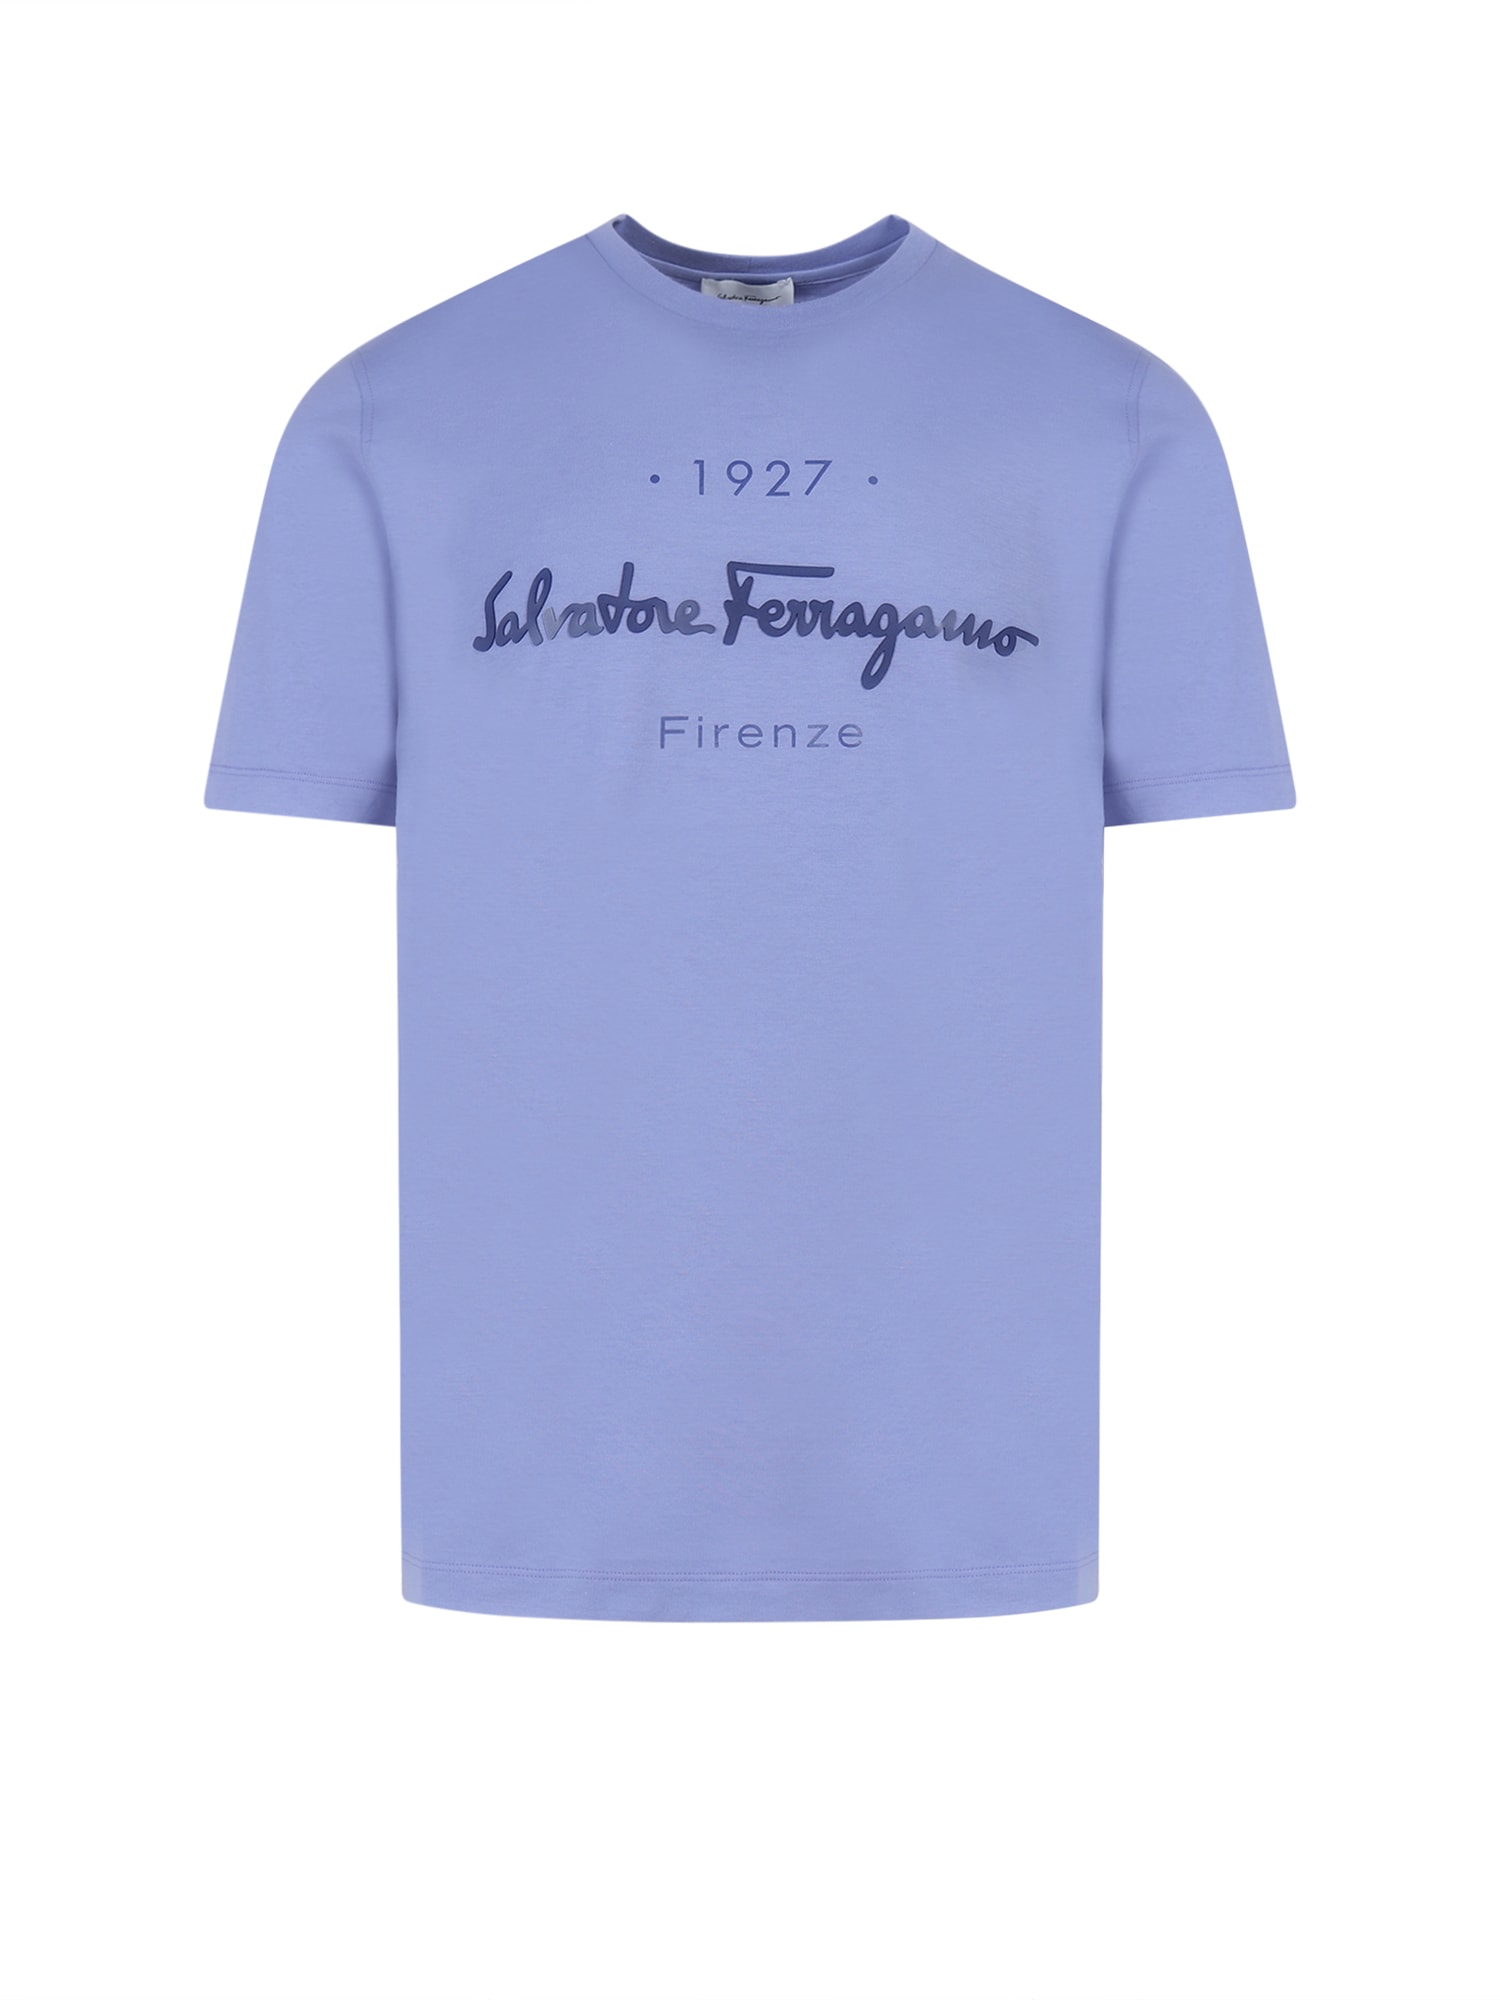 Salvatore Ferragamo T-shirt